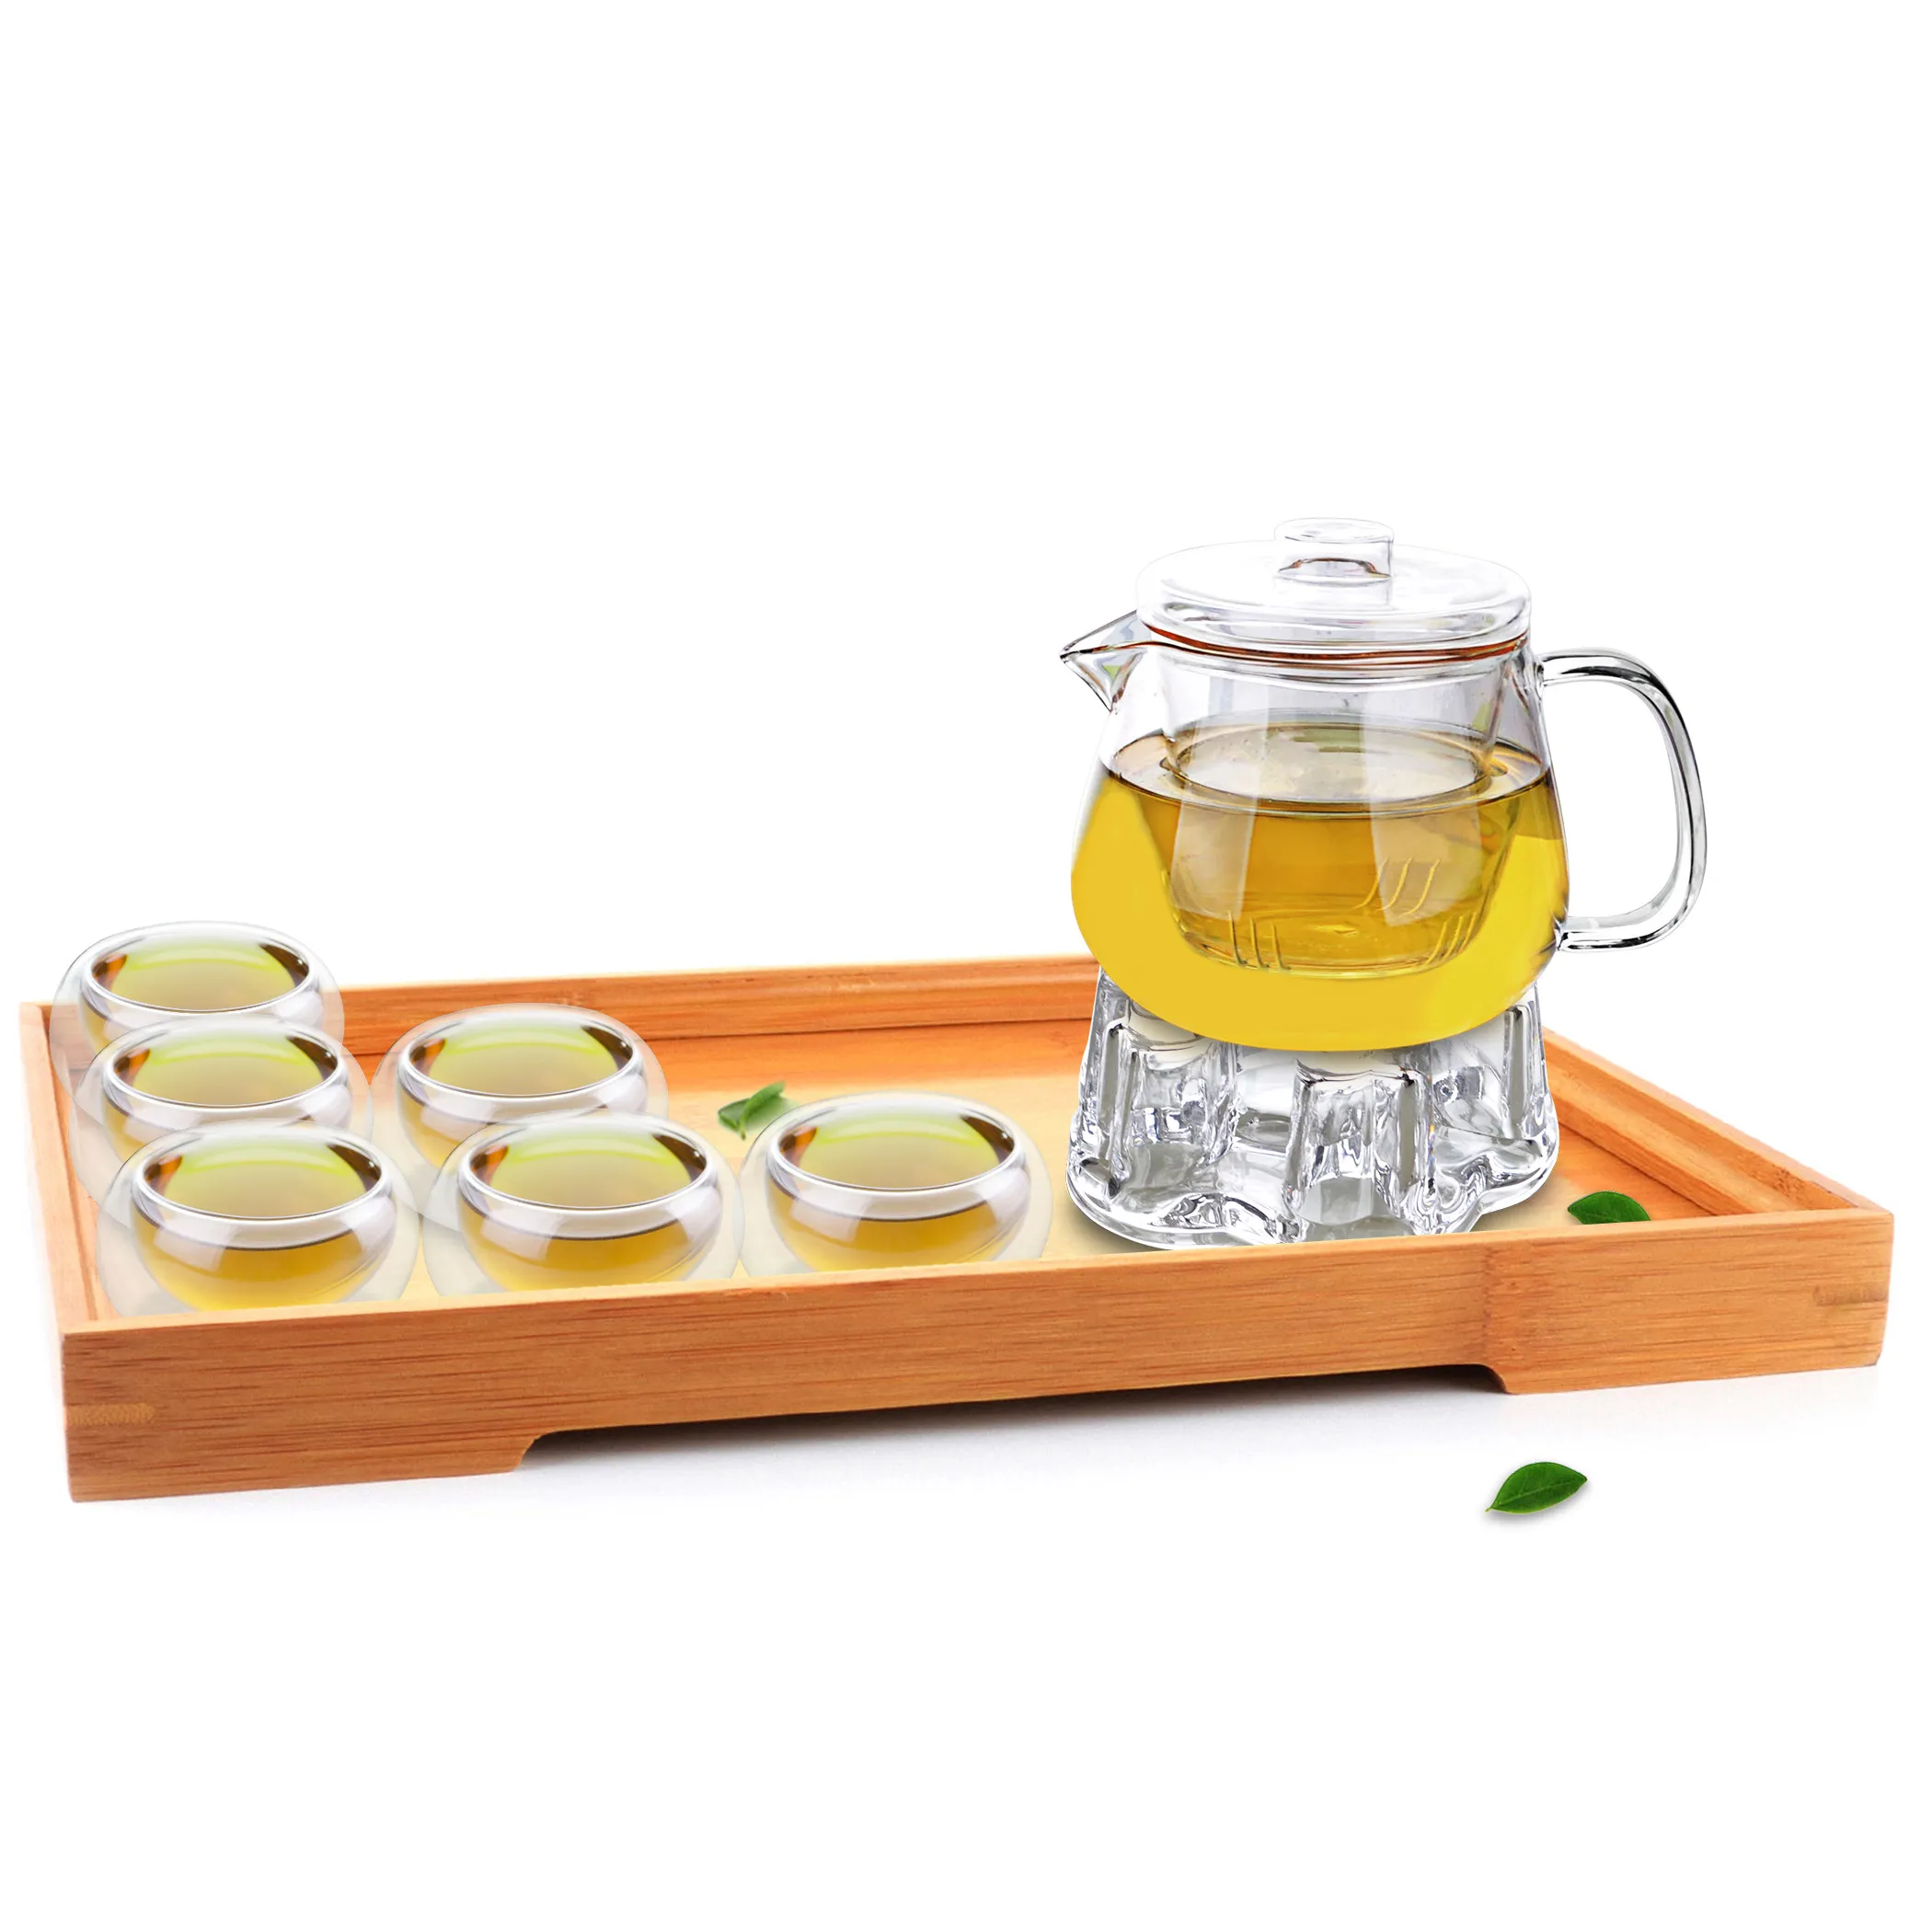 1x 9in1 Kung fu Coffee Tea Set-485ml Heat-Resisting Glass Flower Teapot+Crystal Tea Pot Warmer +6 Double Wall Cups +Bamboo Tray